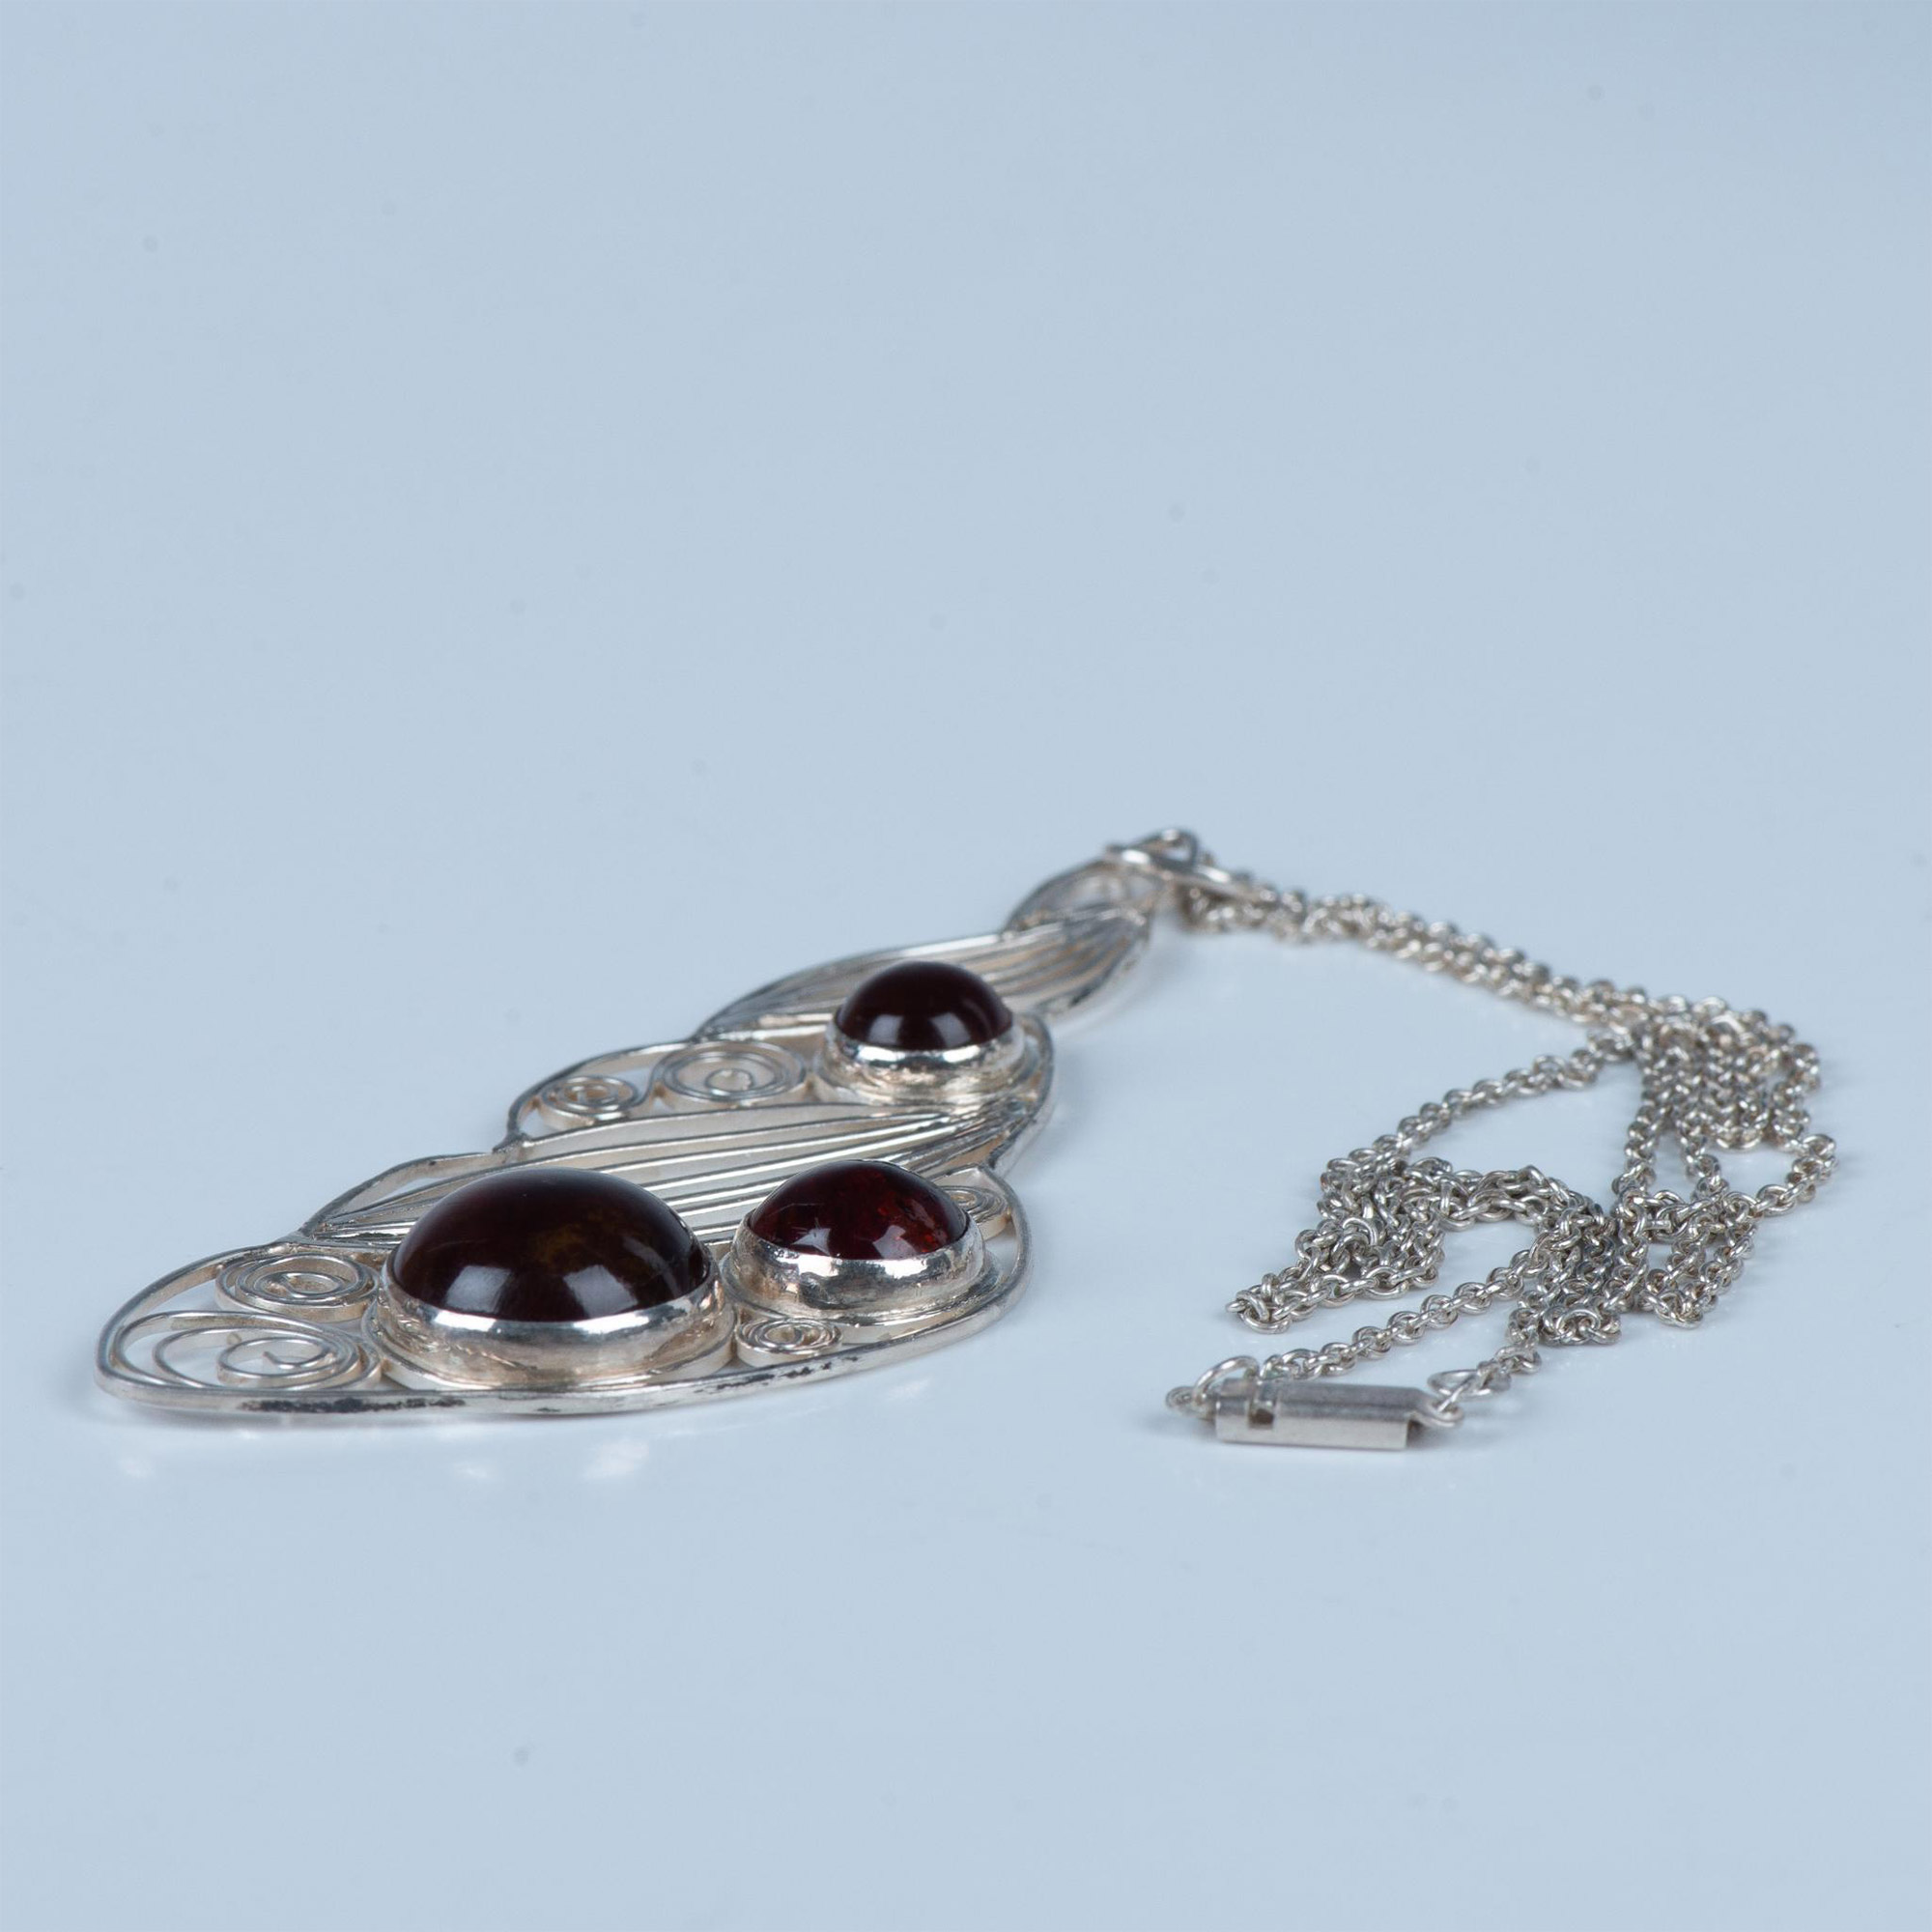 Art Nouveau Sterling Silver & Amber Pendant Necklace - Image 4 of 4